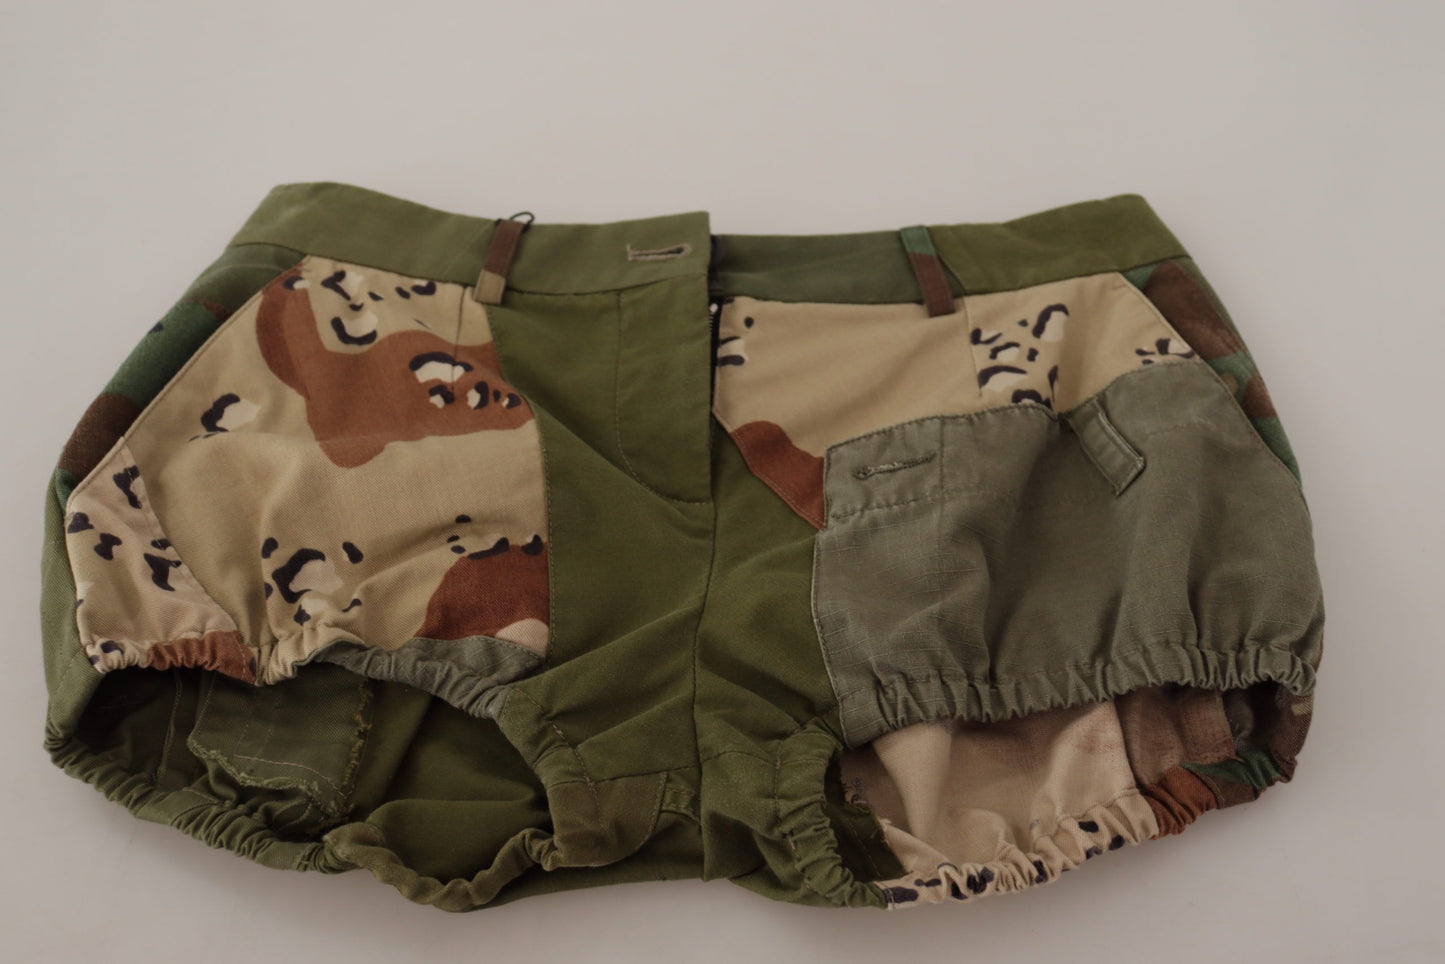 Dolce & Gabbana Green High Waist Hot Pantals Cotton Army Shorts